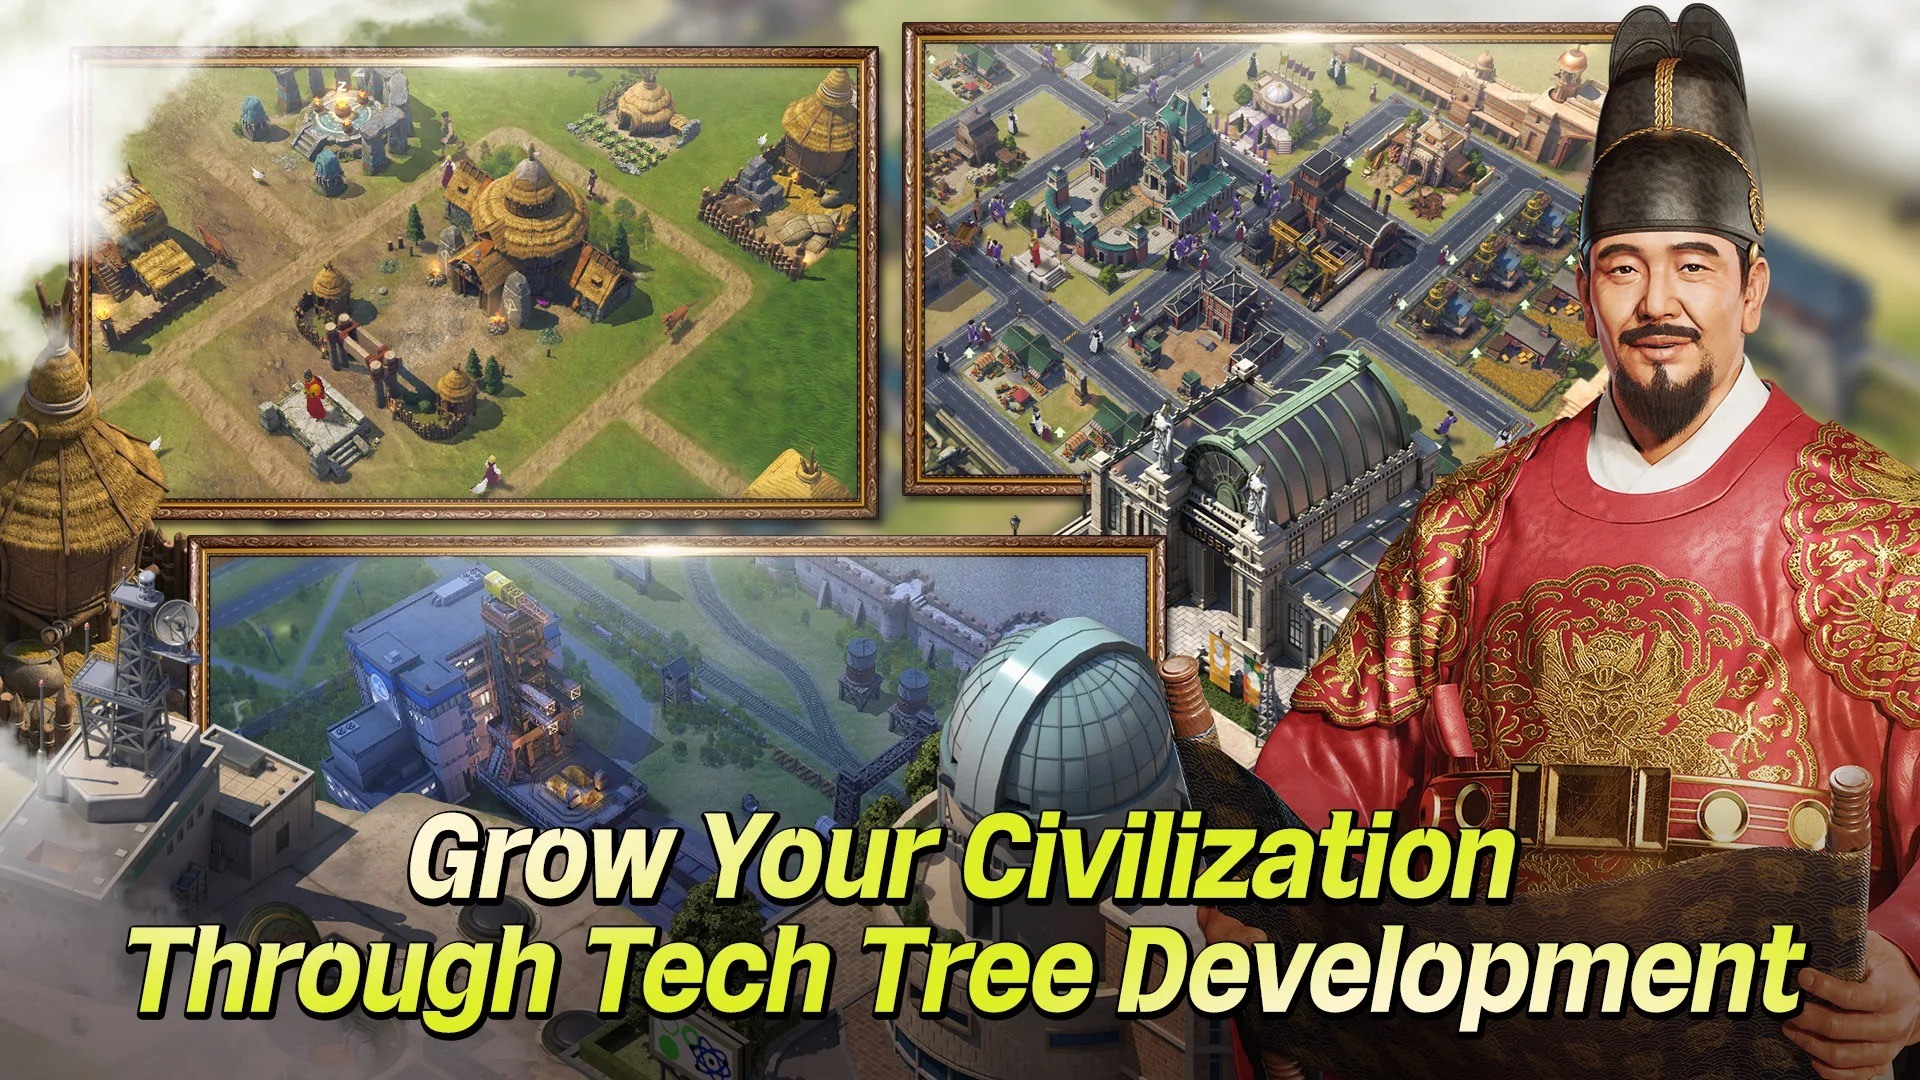 Civilization: Reign of Power - Game mobile chiến thuật thuộc thương hiệu Civilization lừng danh